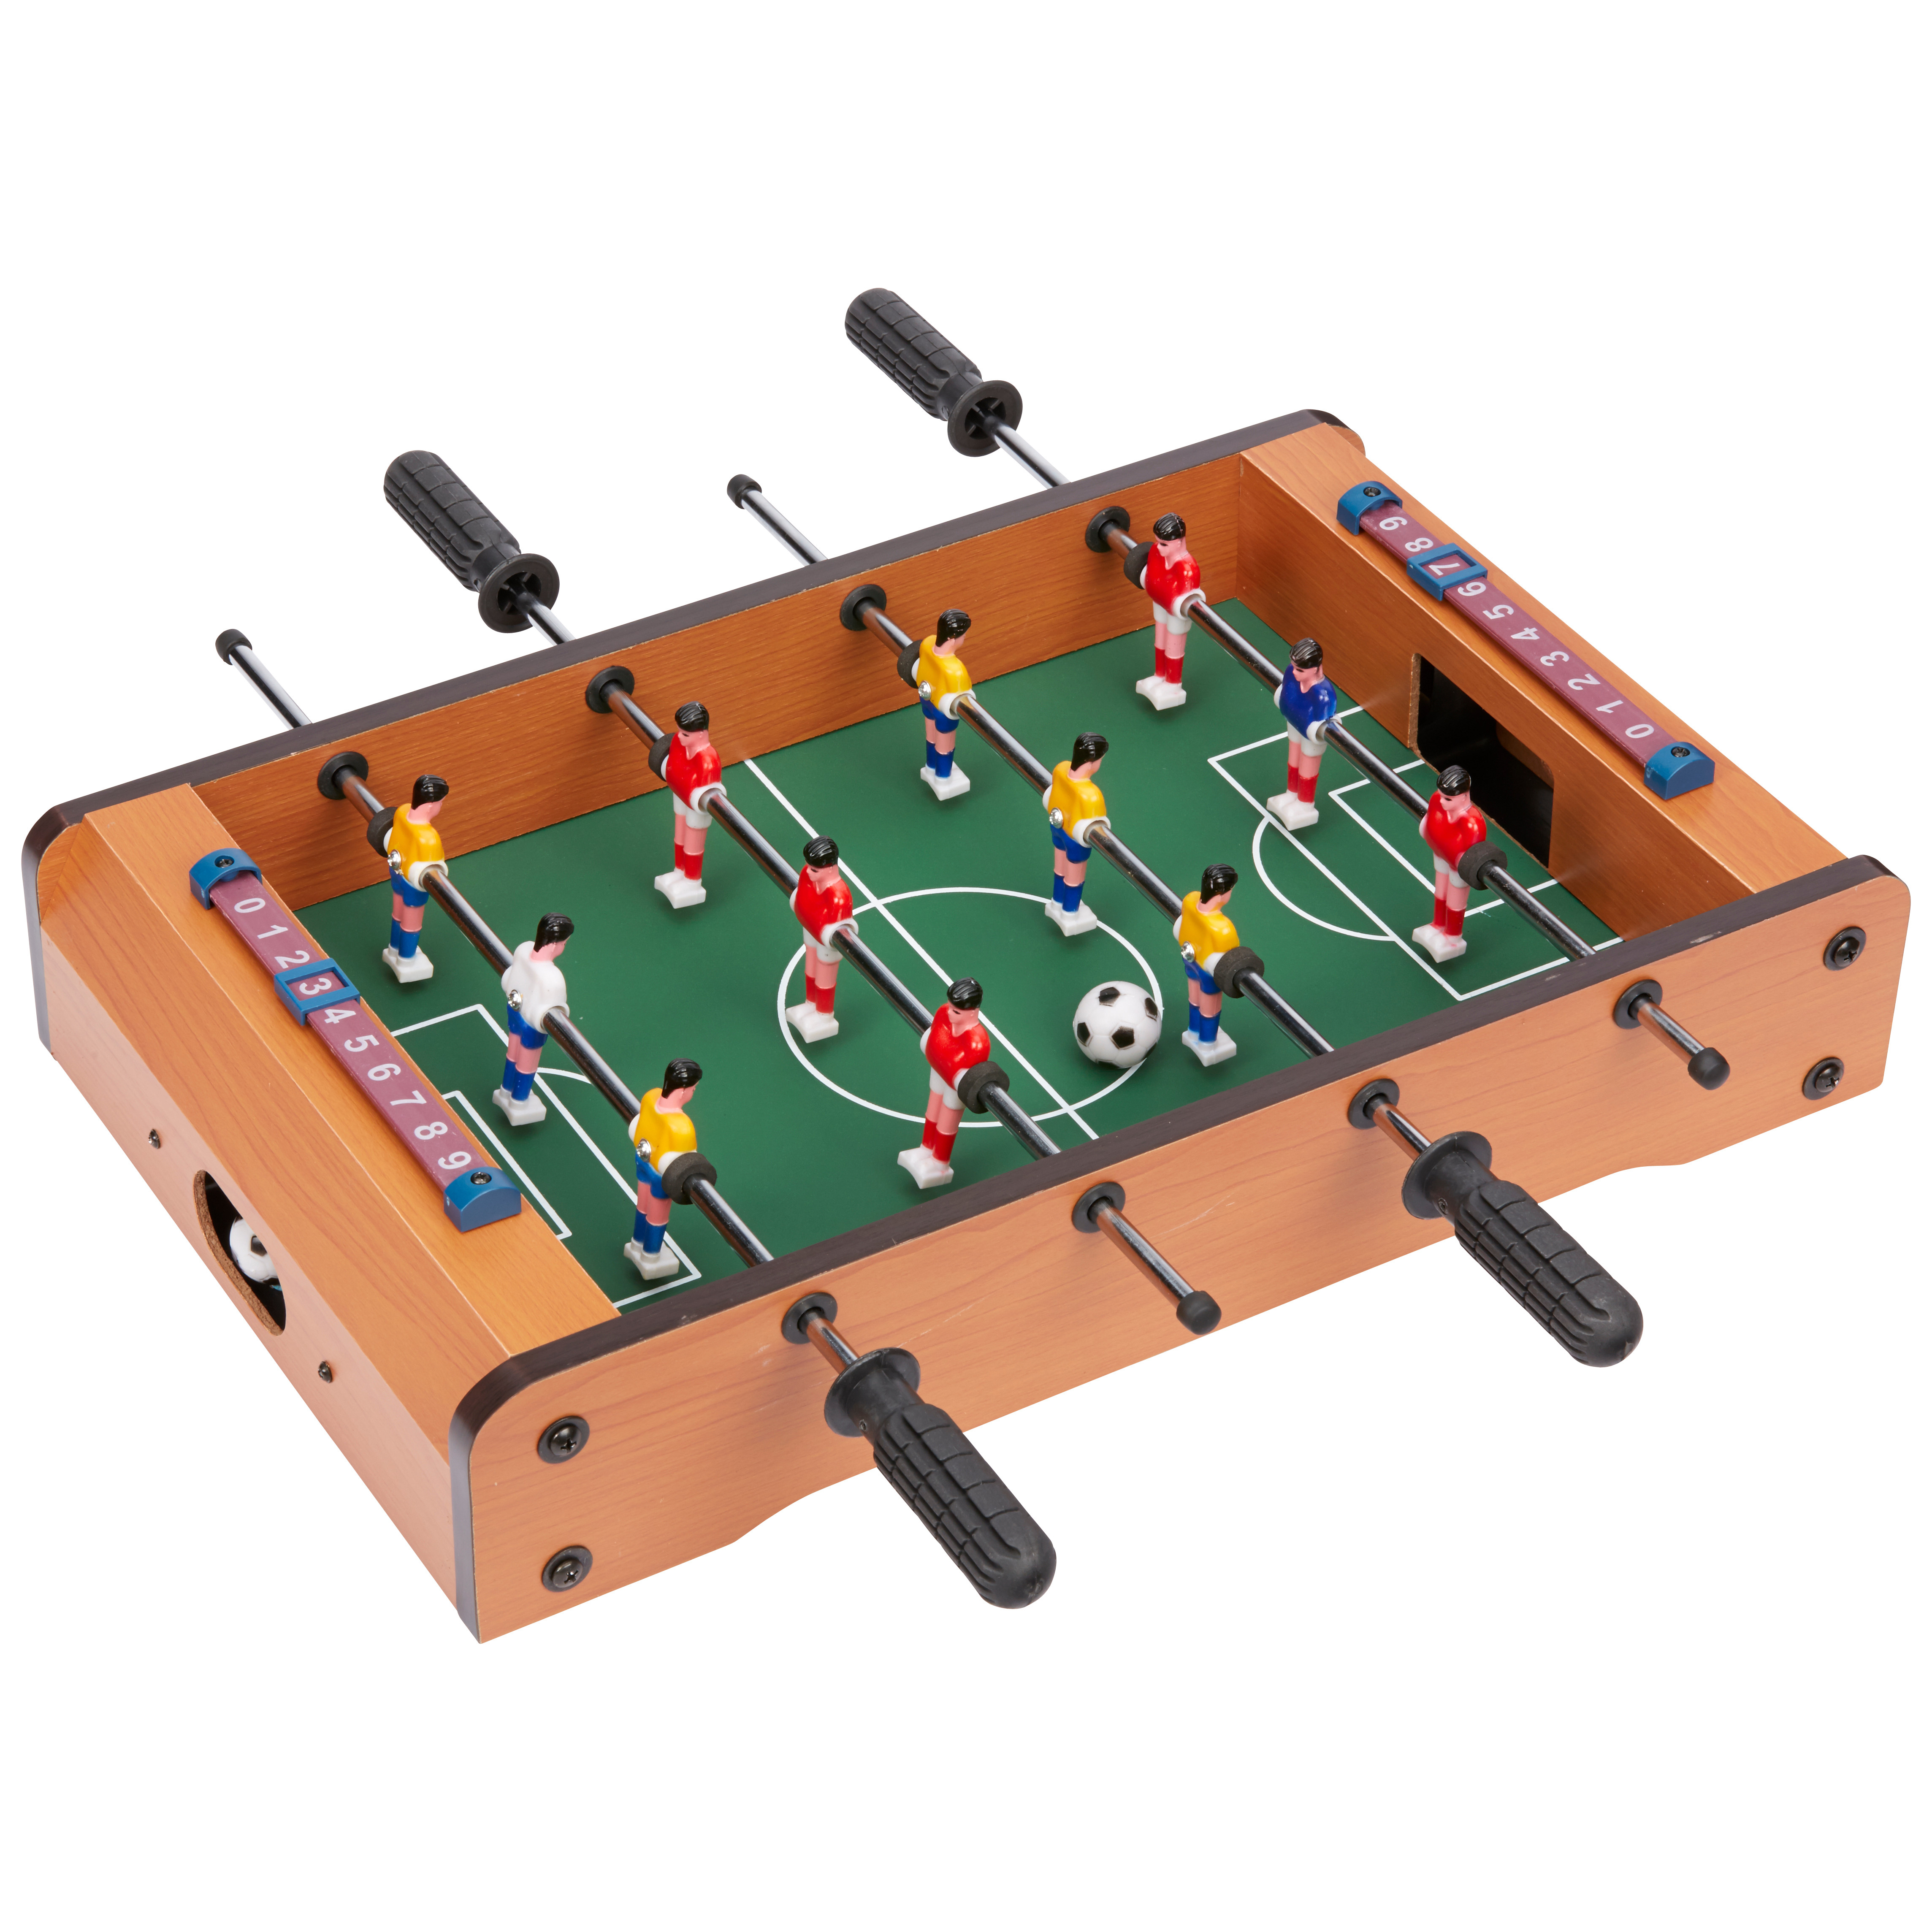 Ideal Premier Foosball Tabletop Game - image 4 of 4